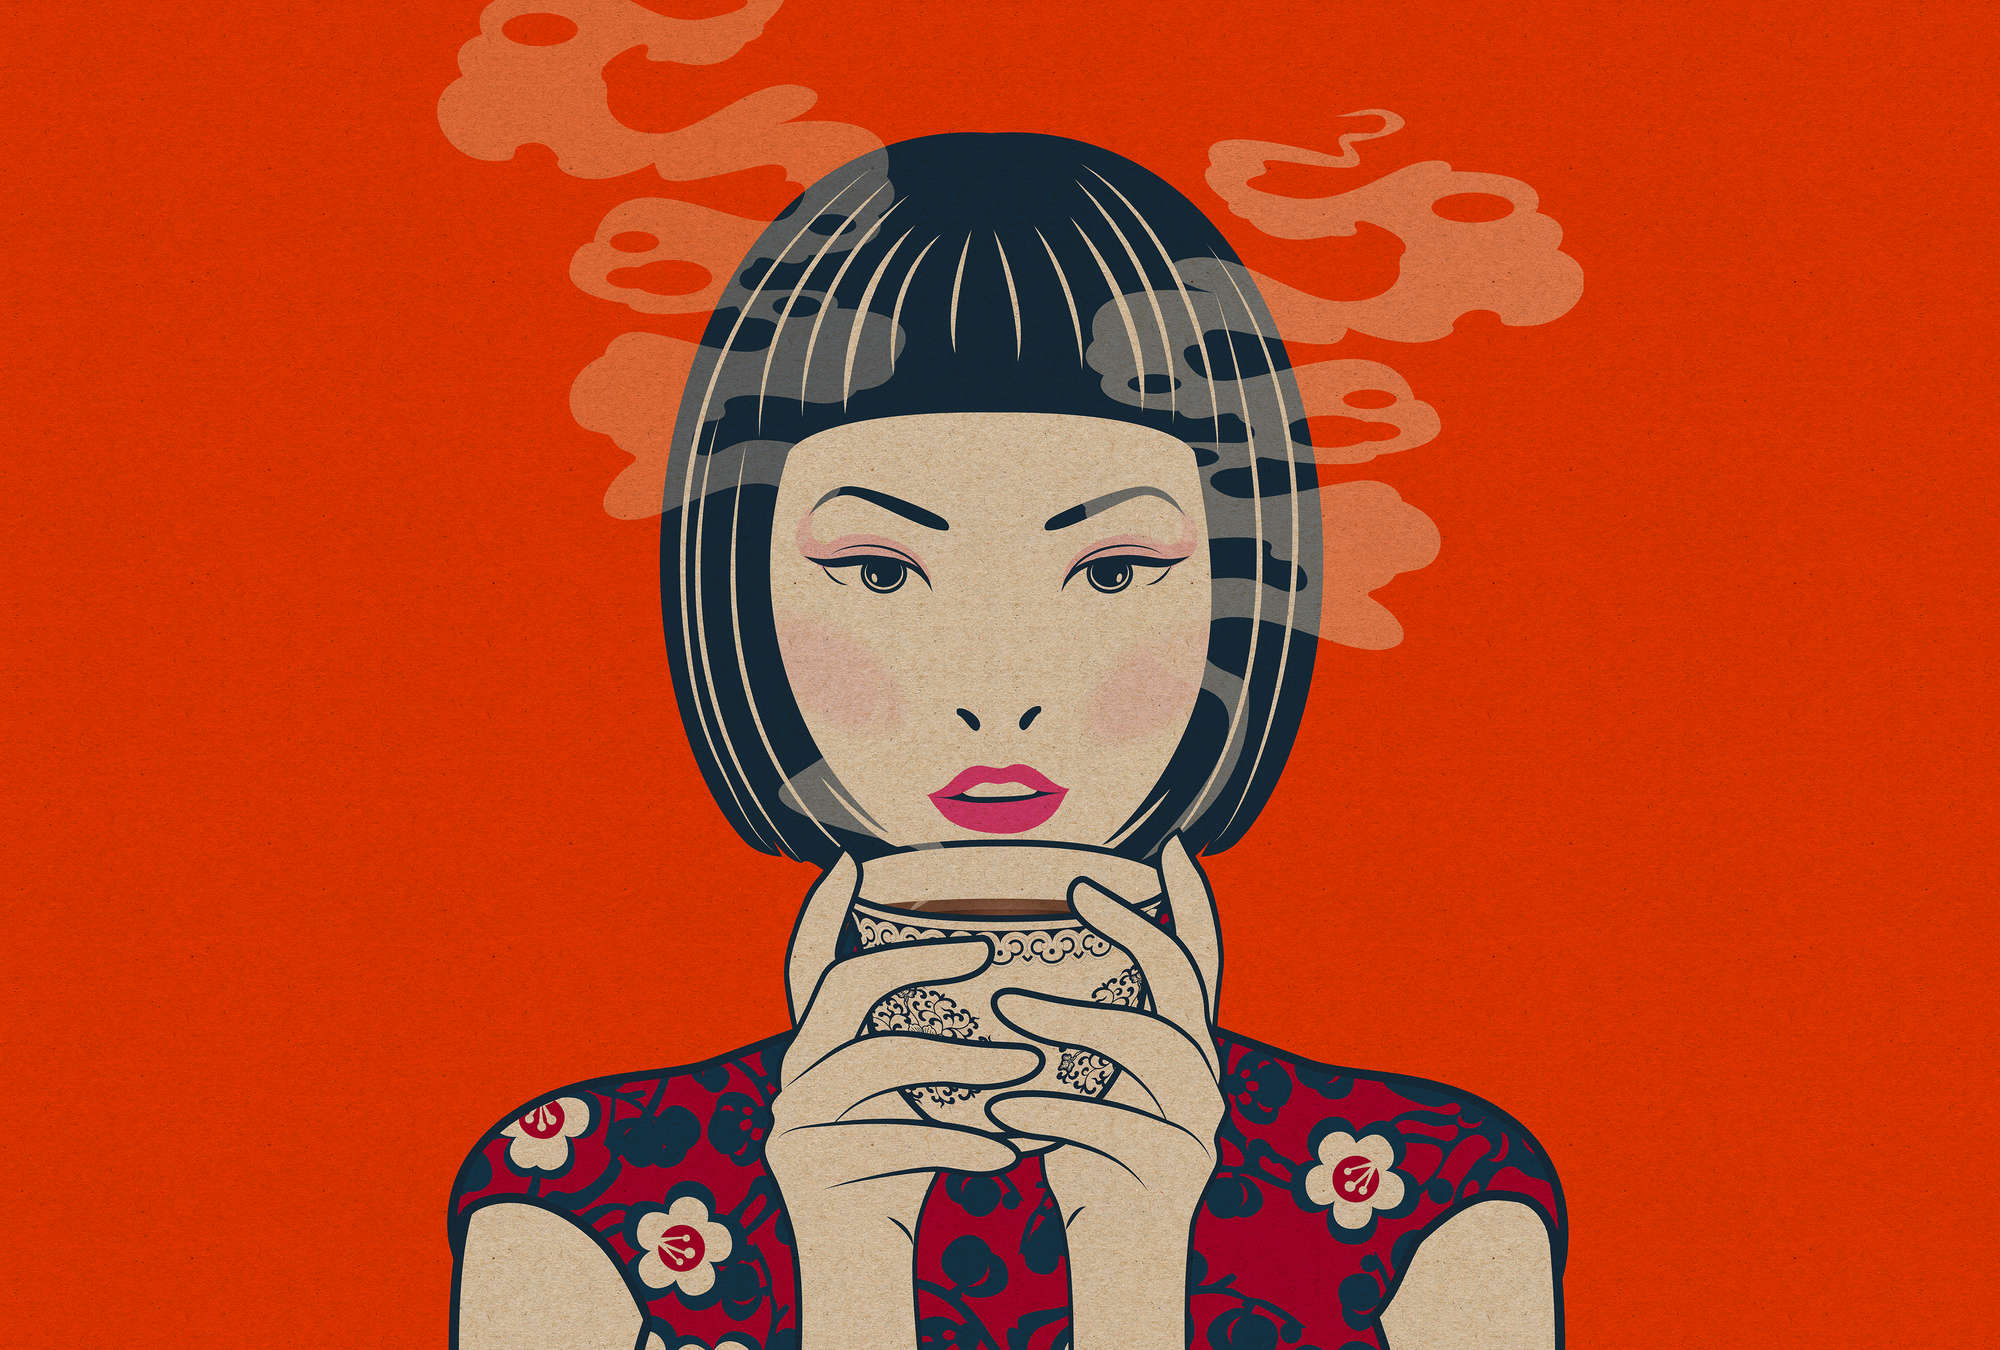             Akari 2 - Time for Tea, Manga Style in Cardboard Texture on Wallpaper - Beige, Orange | Texture Non-woven
        